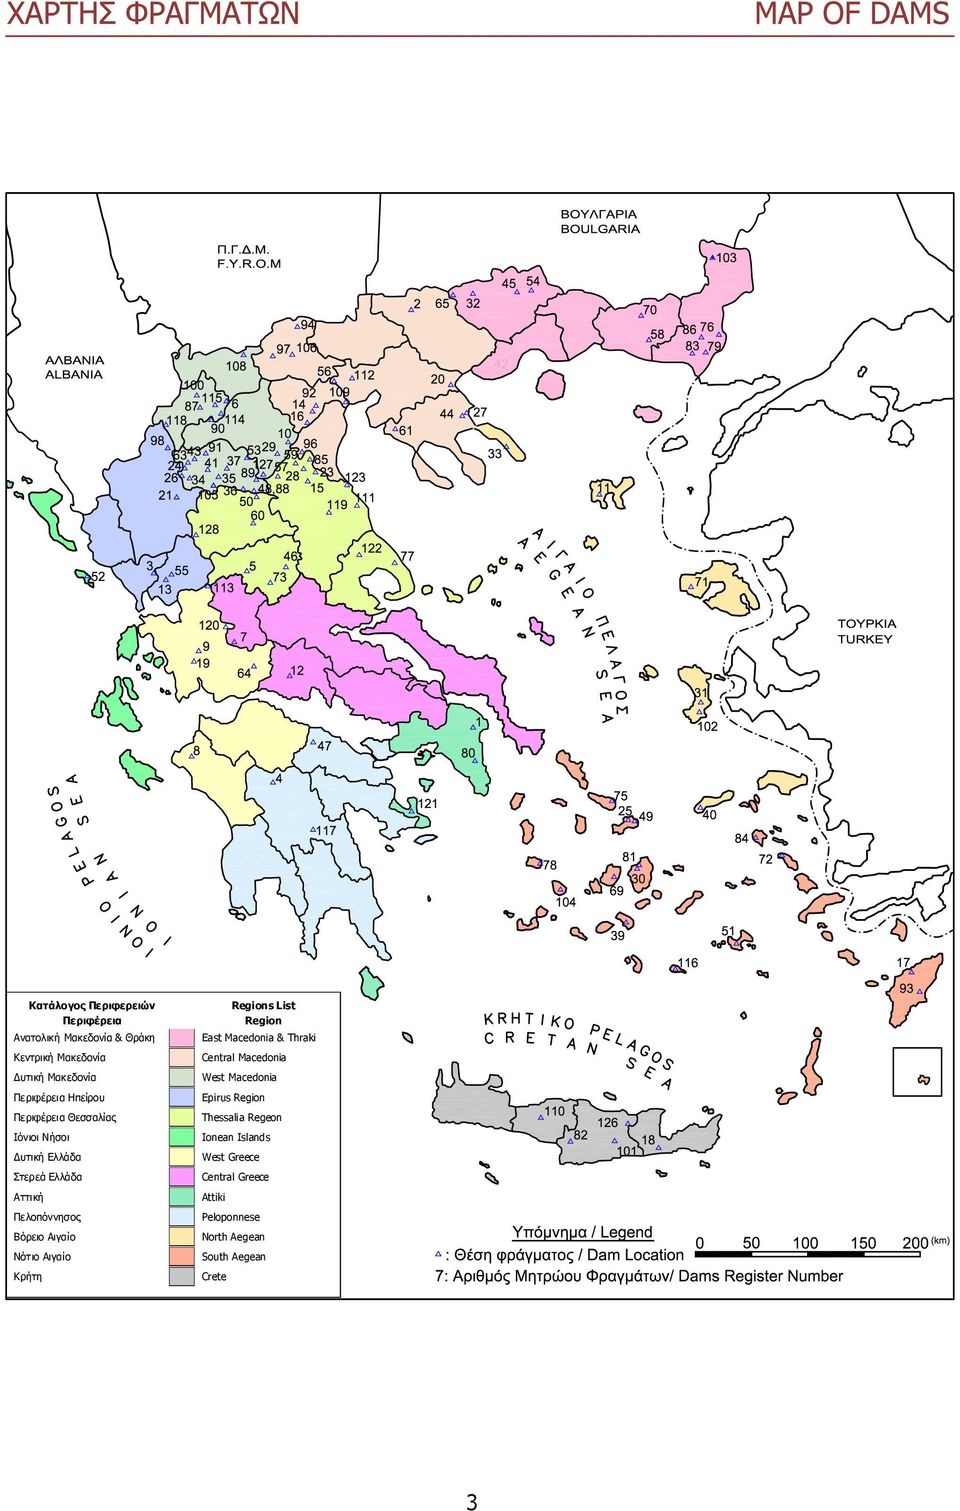 Macedonia & Thraki Central Macedonia West Macedonia Epirus Region Thessalia Regeon